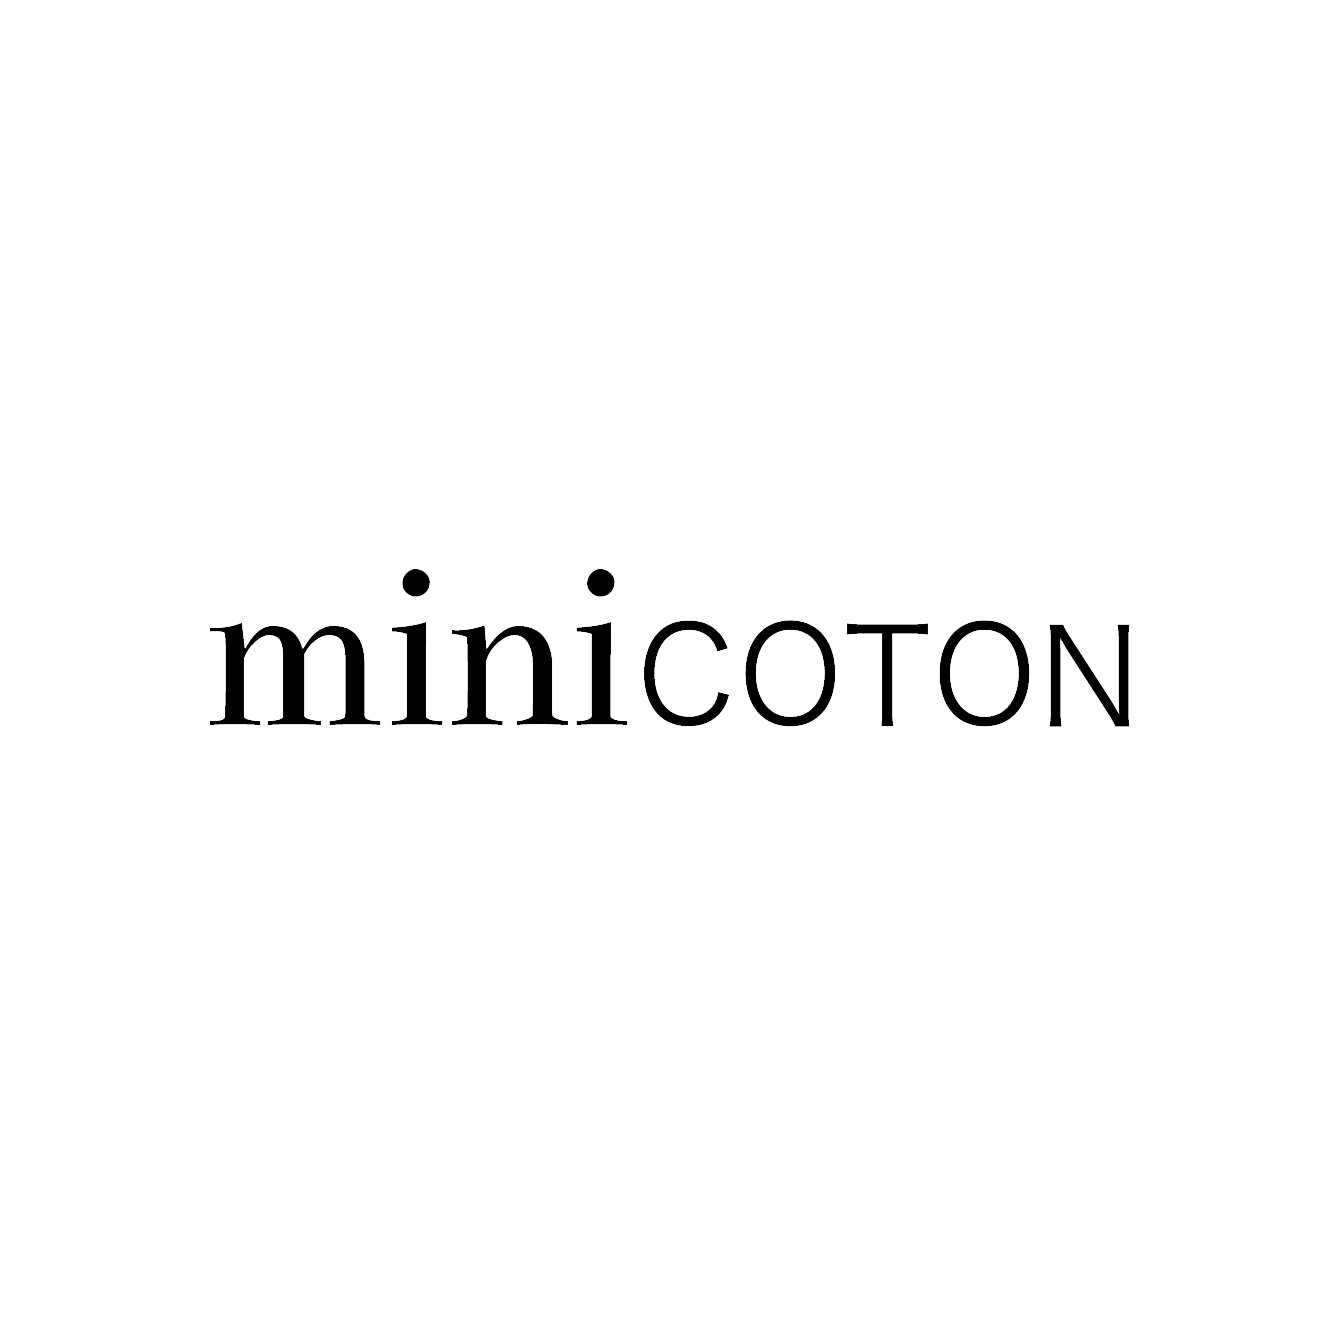 (c) Minicoton.com